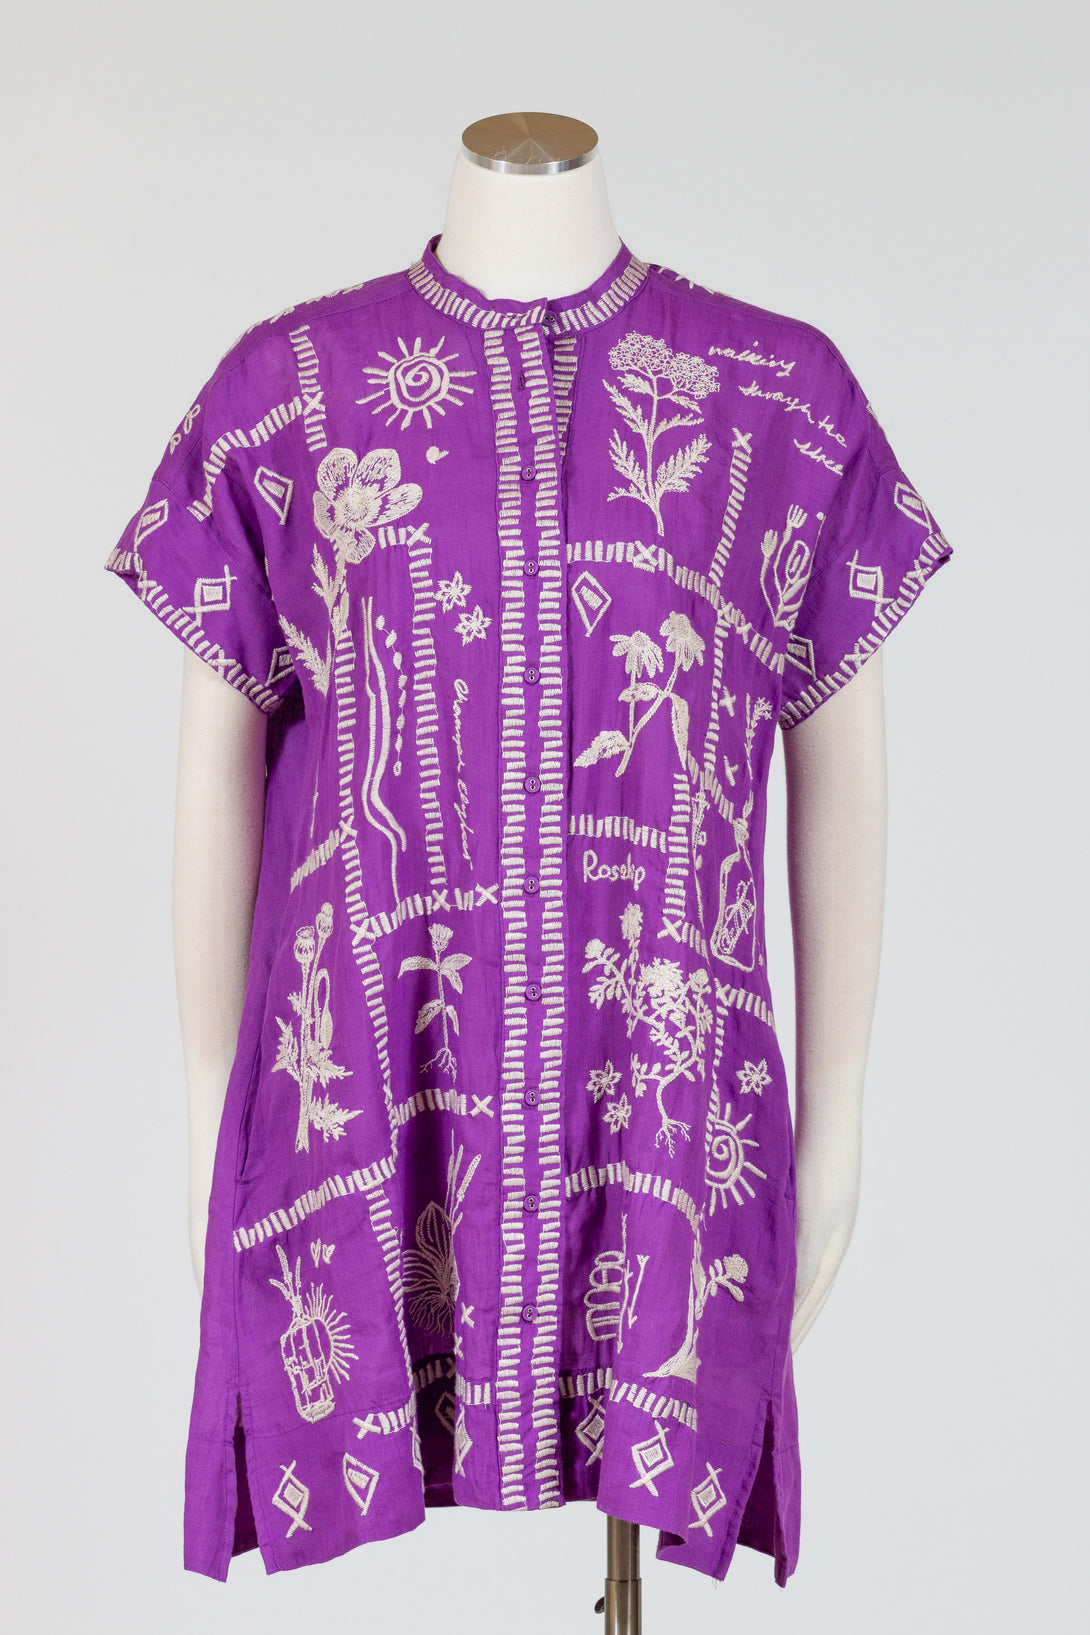 JohnnyWas-Botanique-Swing-Tunic-Iris-Purple-Embroidered